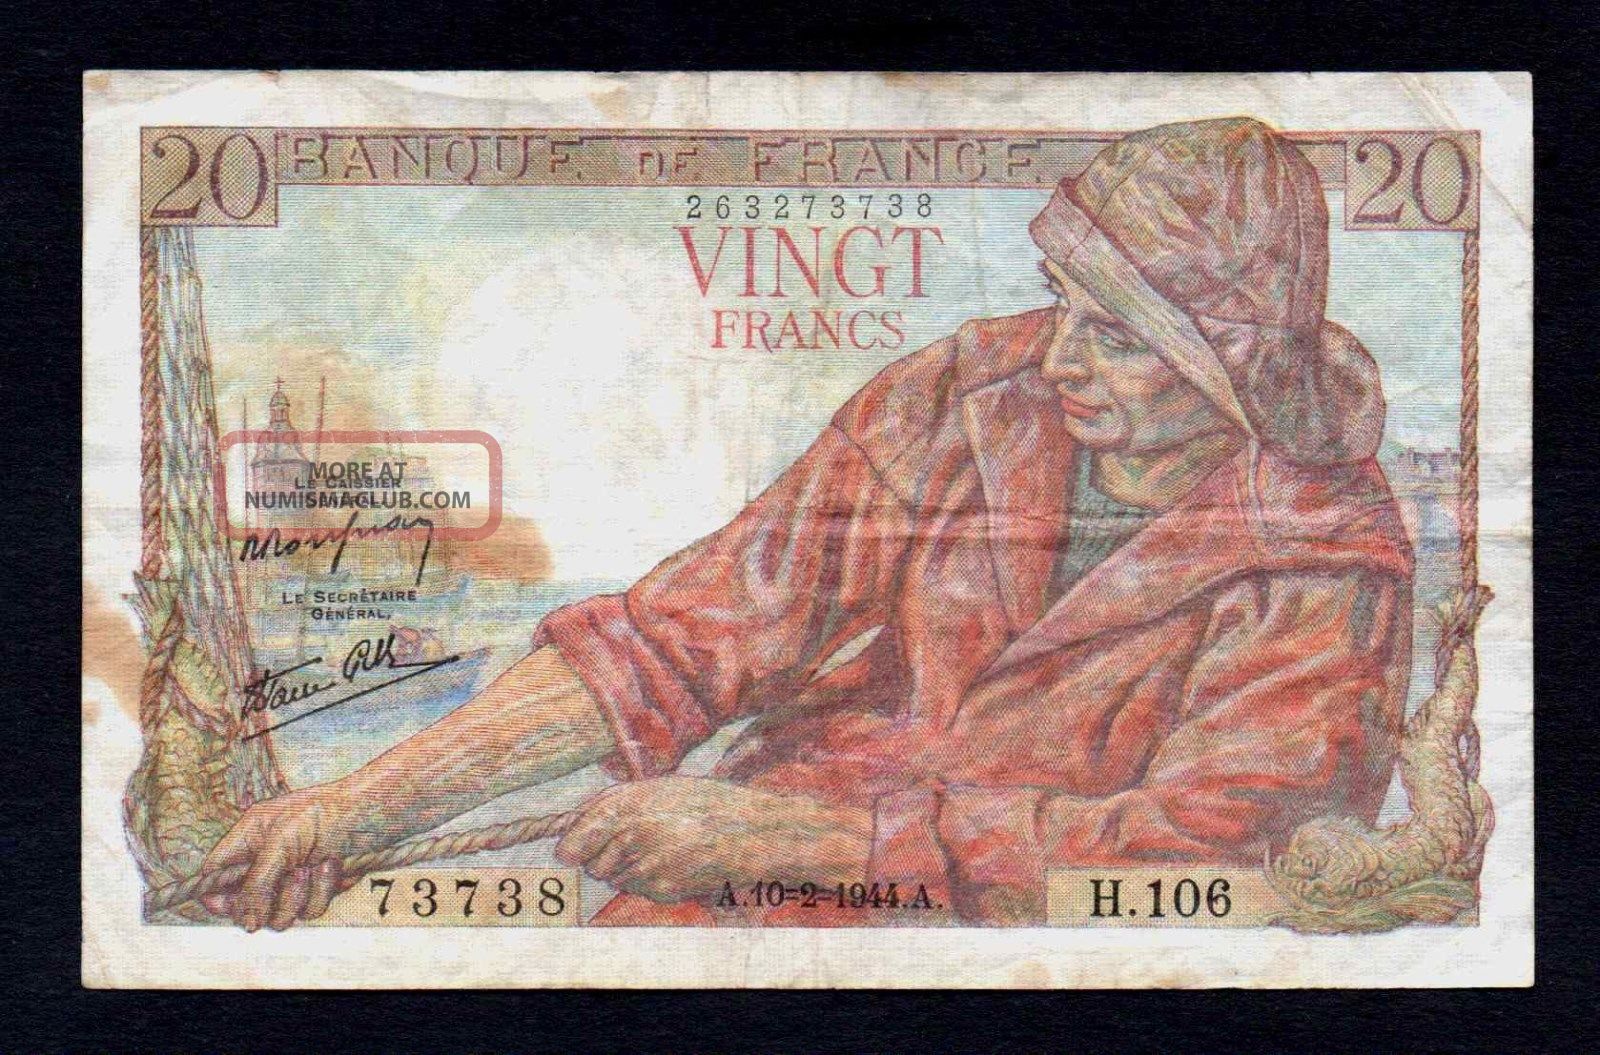 20 Francs 10 - 2 - 1944 Wwii Banque De France Europe photo